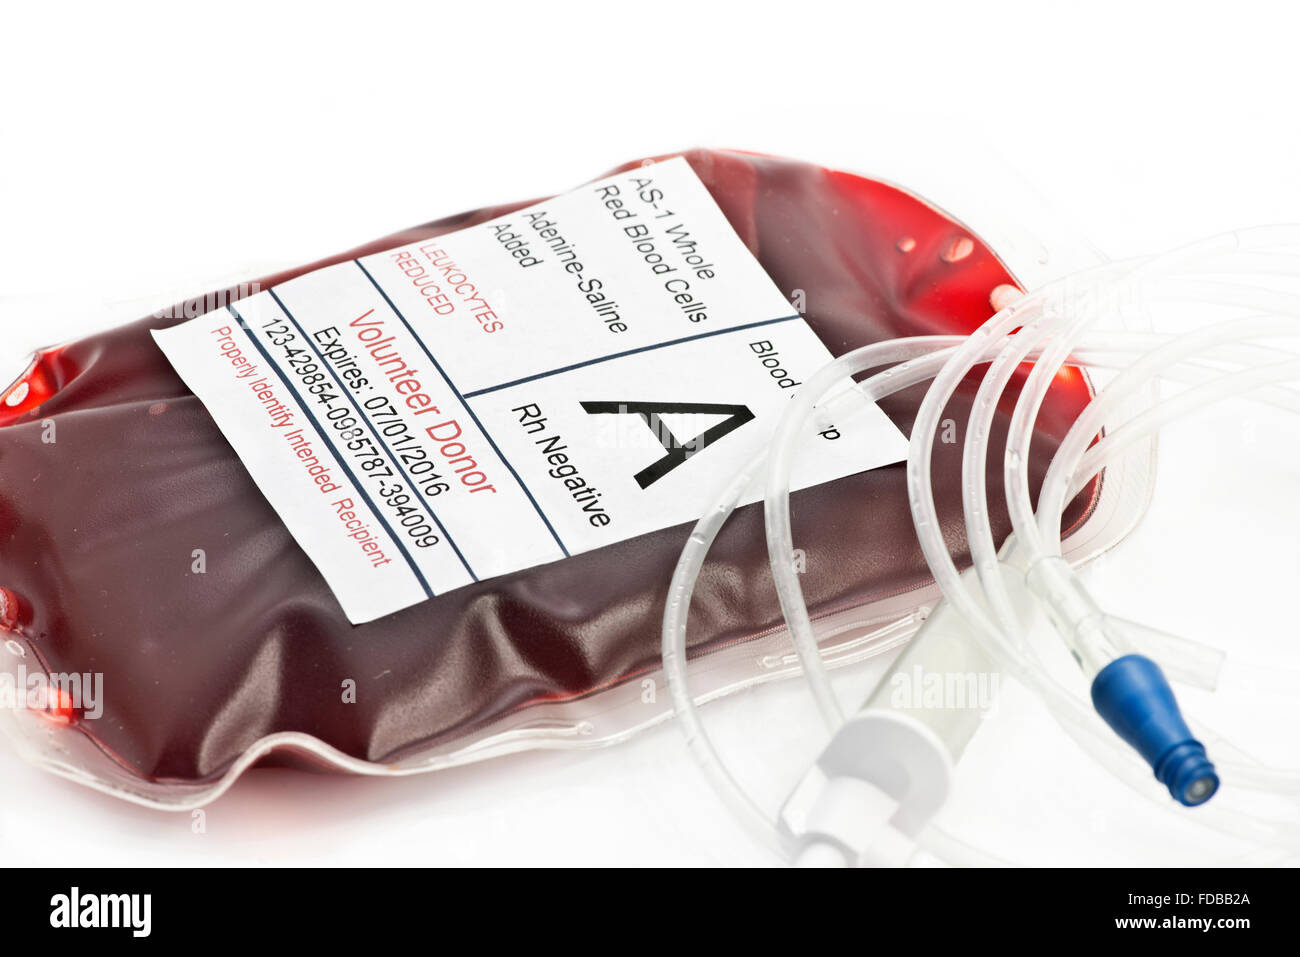 clipart blood transfusion - photo #48